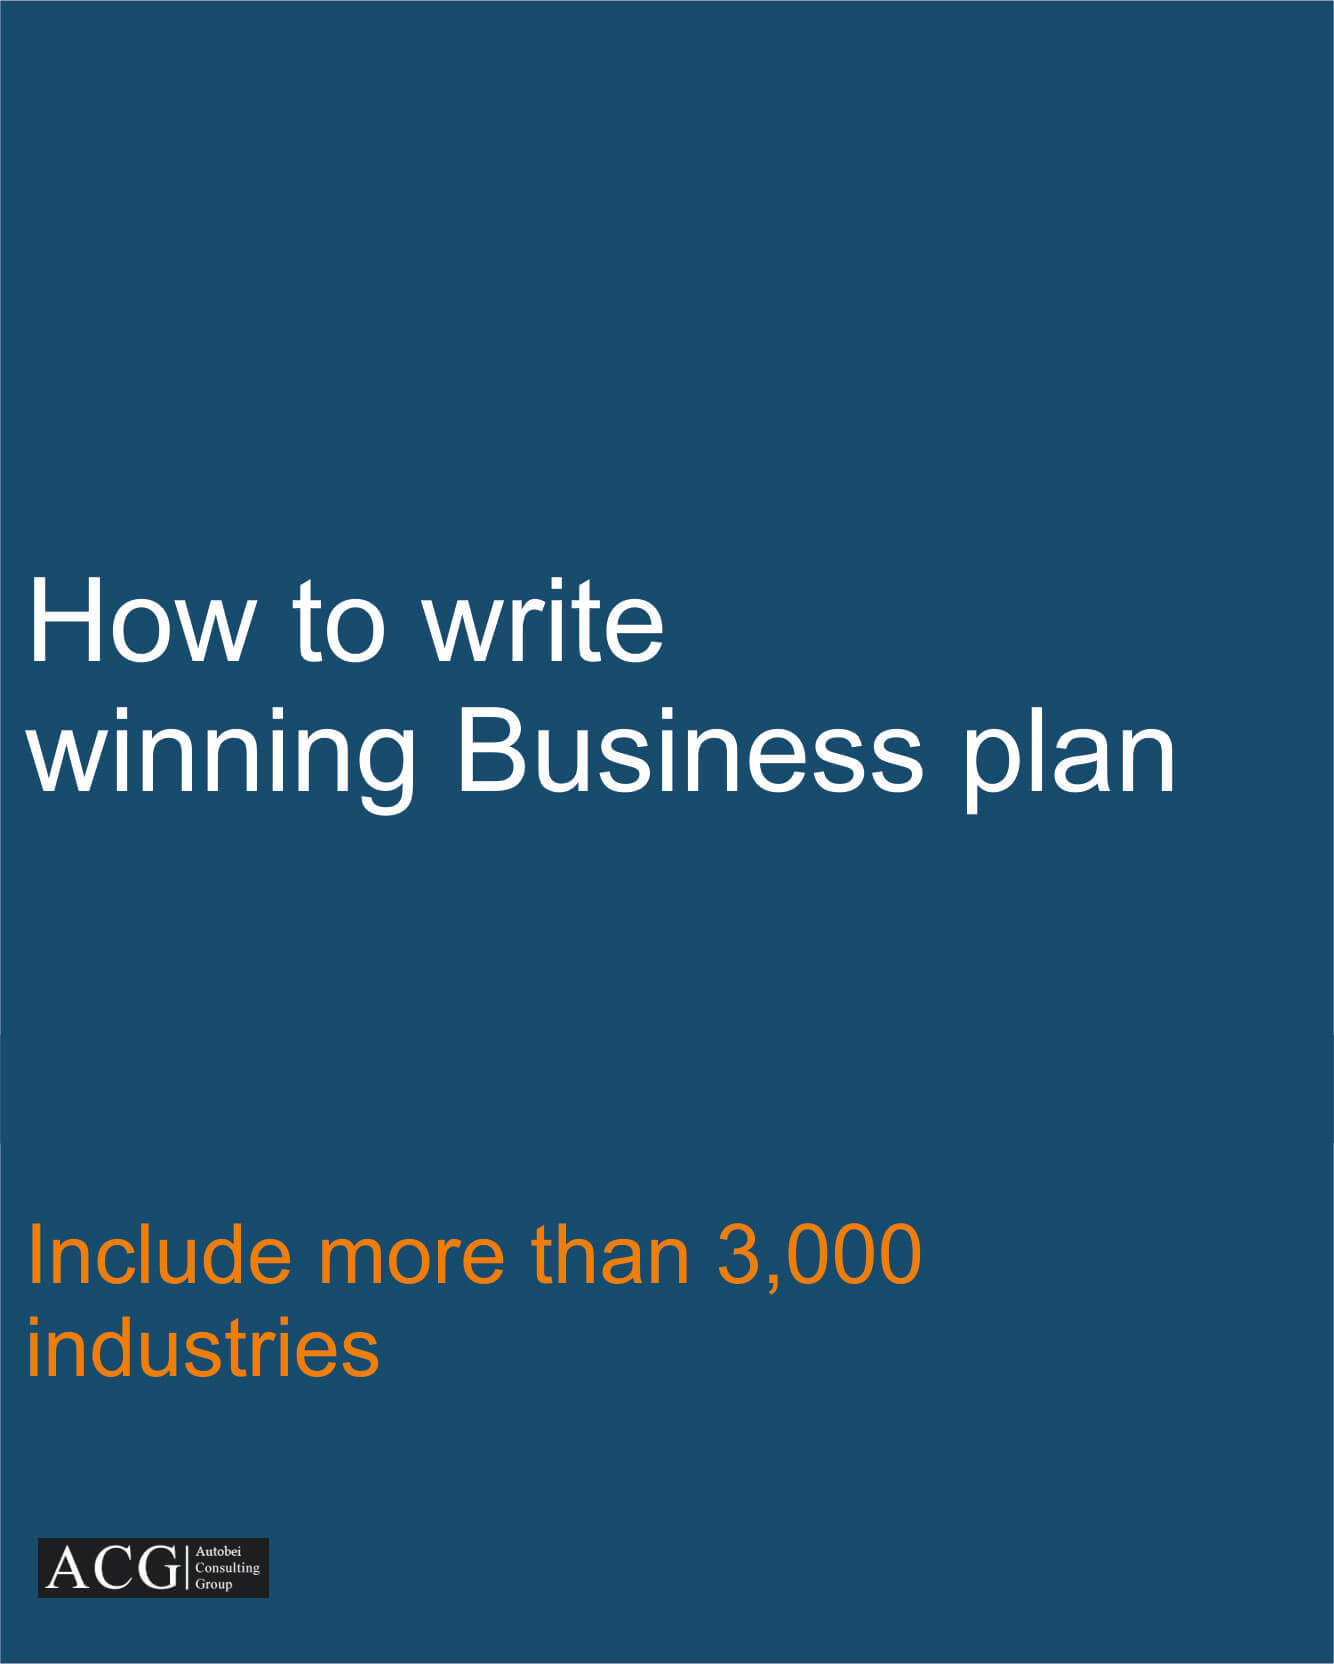 How to write winning Business plan